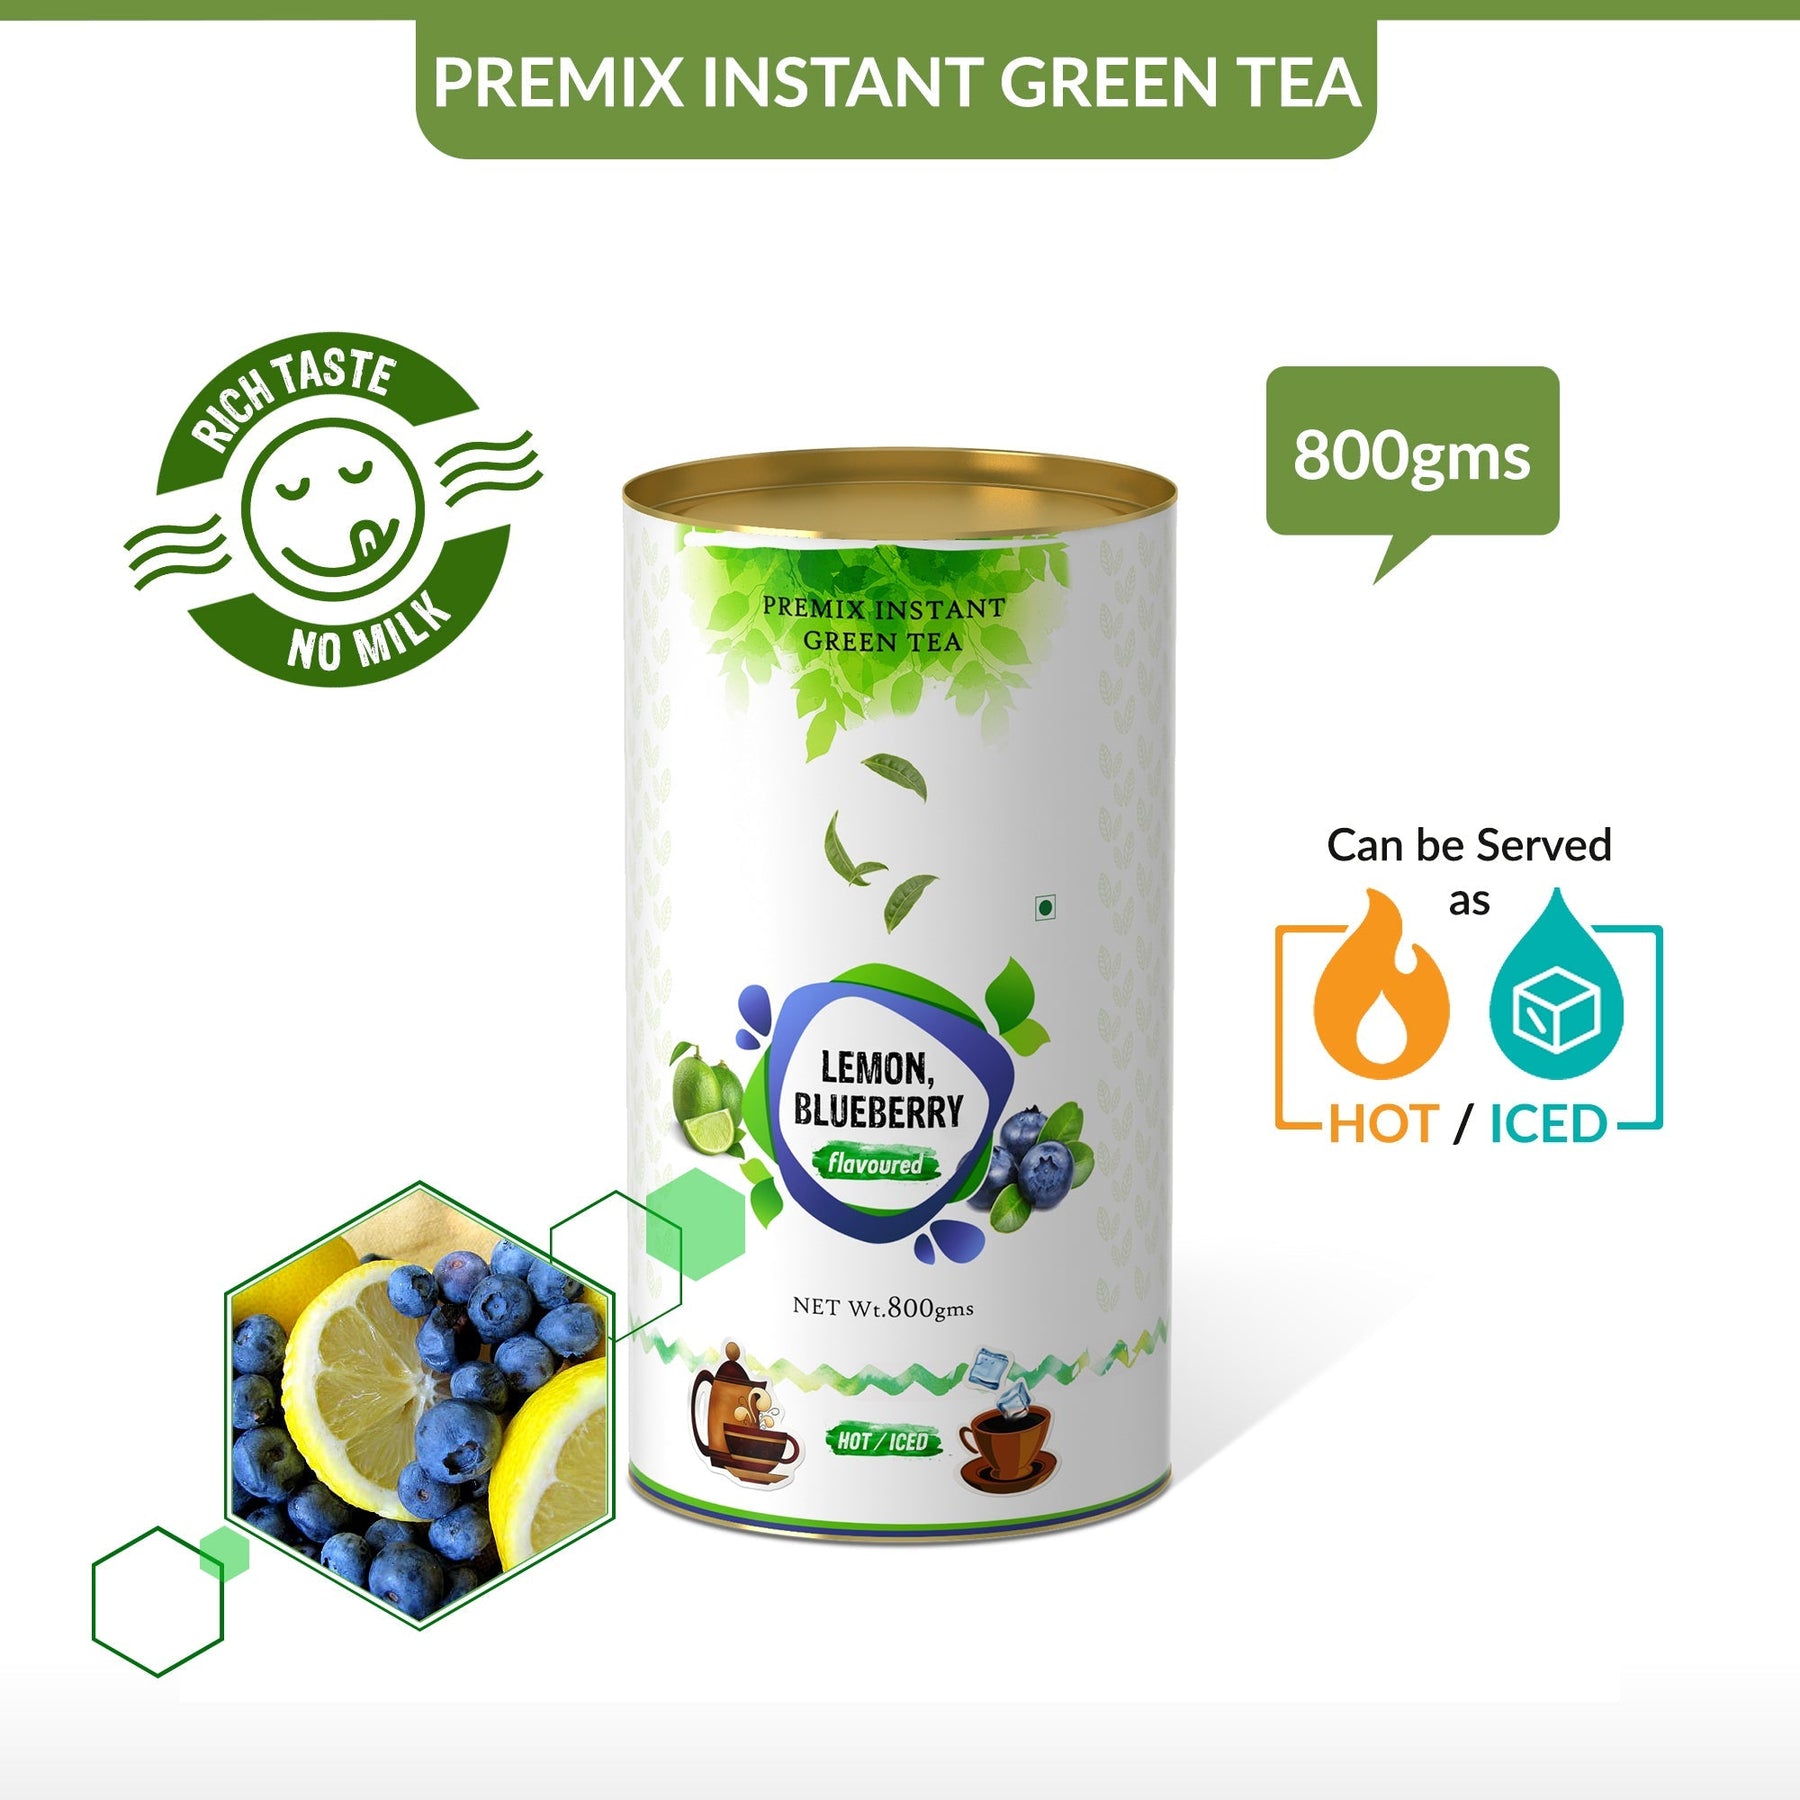 Lemon Blueberry Flavored Instant Green Tea - 800 gms